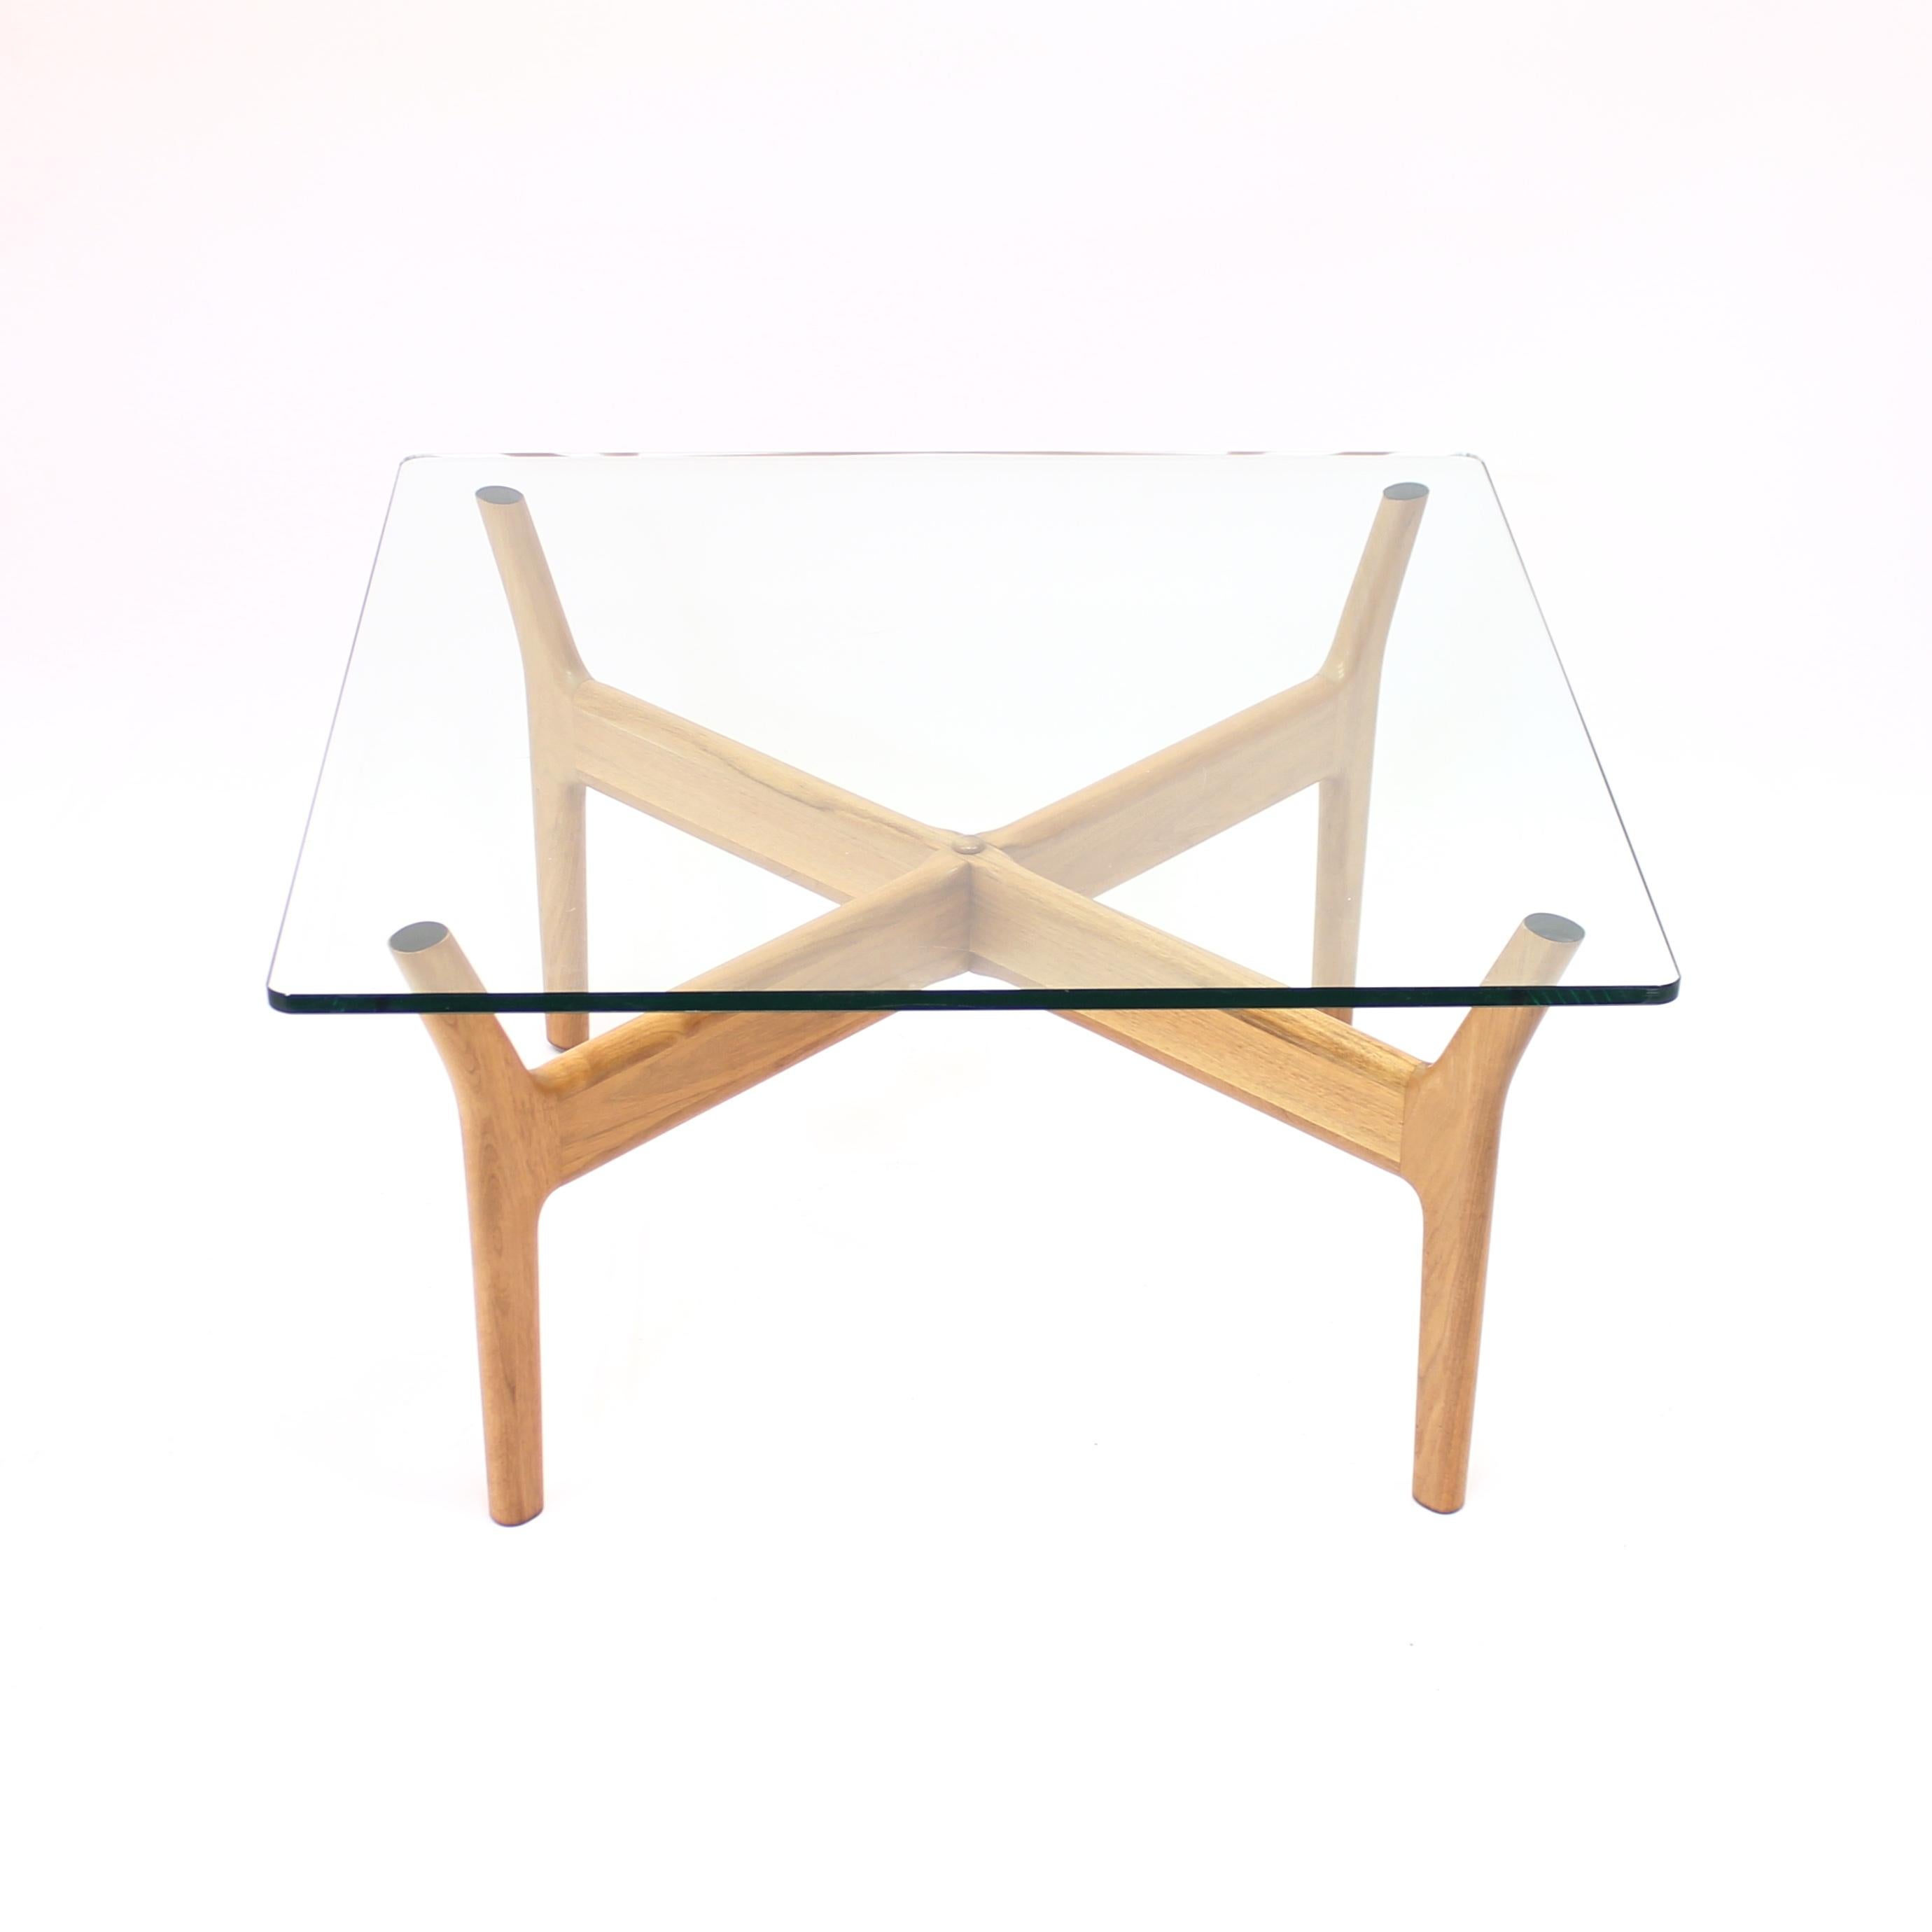 20th Century Prisma/2 Walnut Coffee Table, Attributed to Alf Svensson, by Tingströms Möbelfab